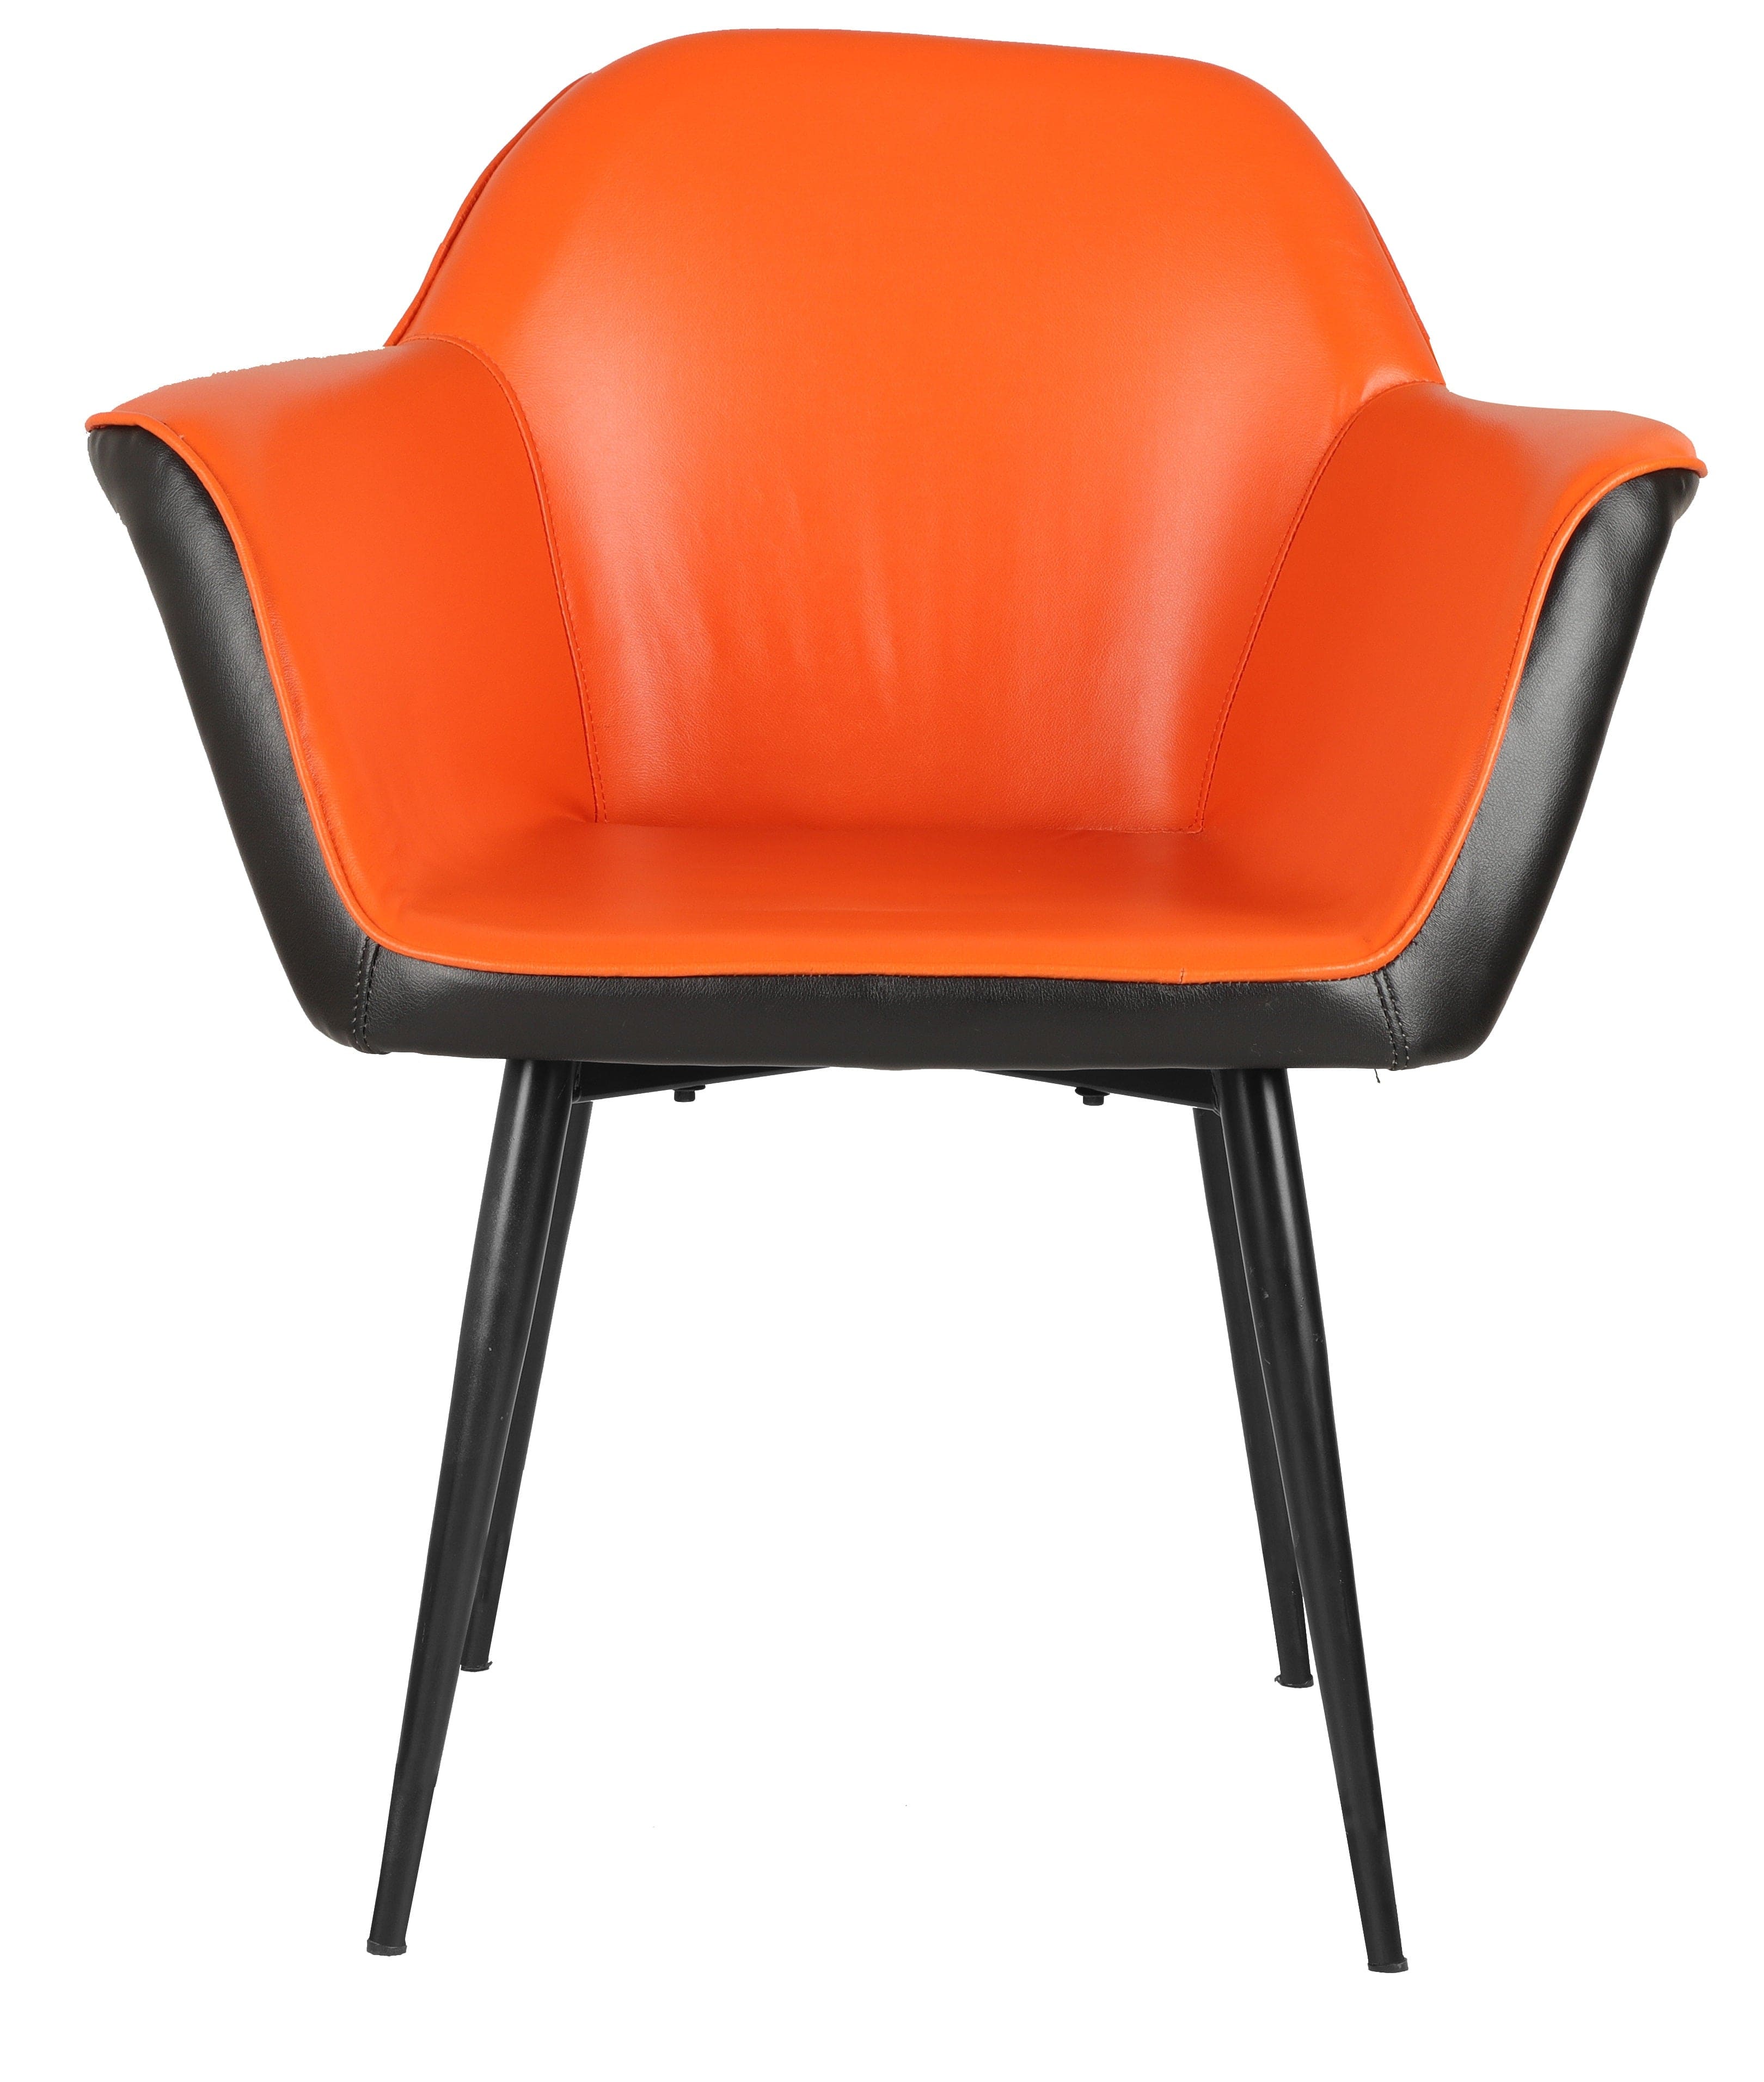 Adiko Lounge Chair Stool in Orange / Black Color